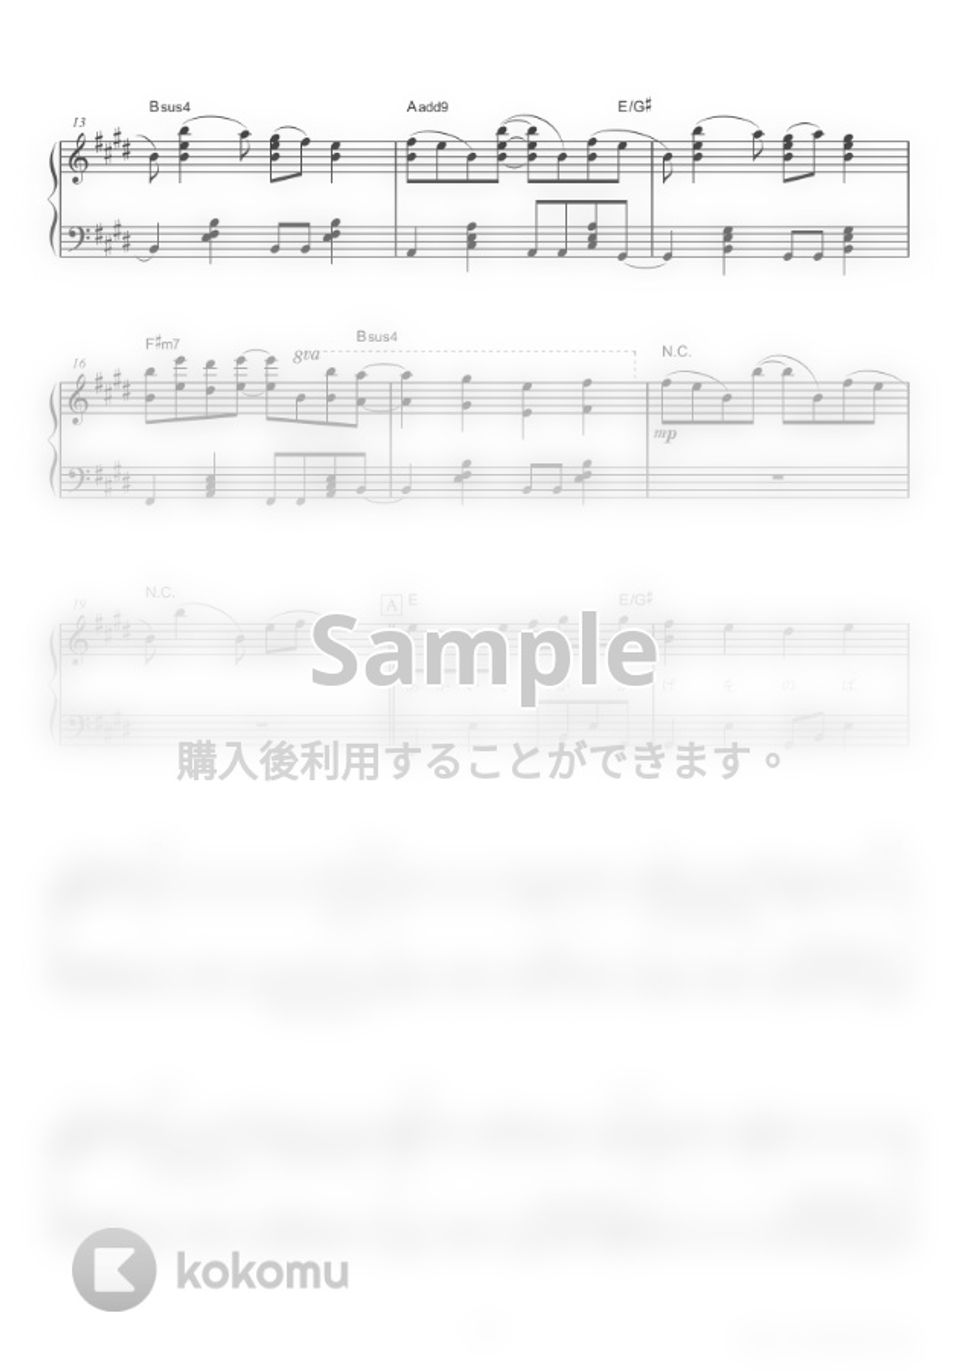 CHiCO with HoneyWorks - プライド革命 (アニメ『銀魂゜』オープニングテーマ) by ピアノの本棚